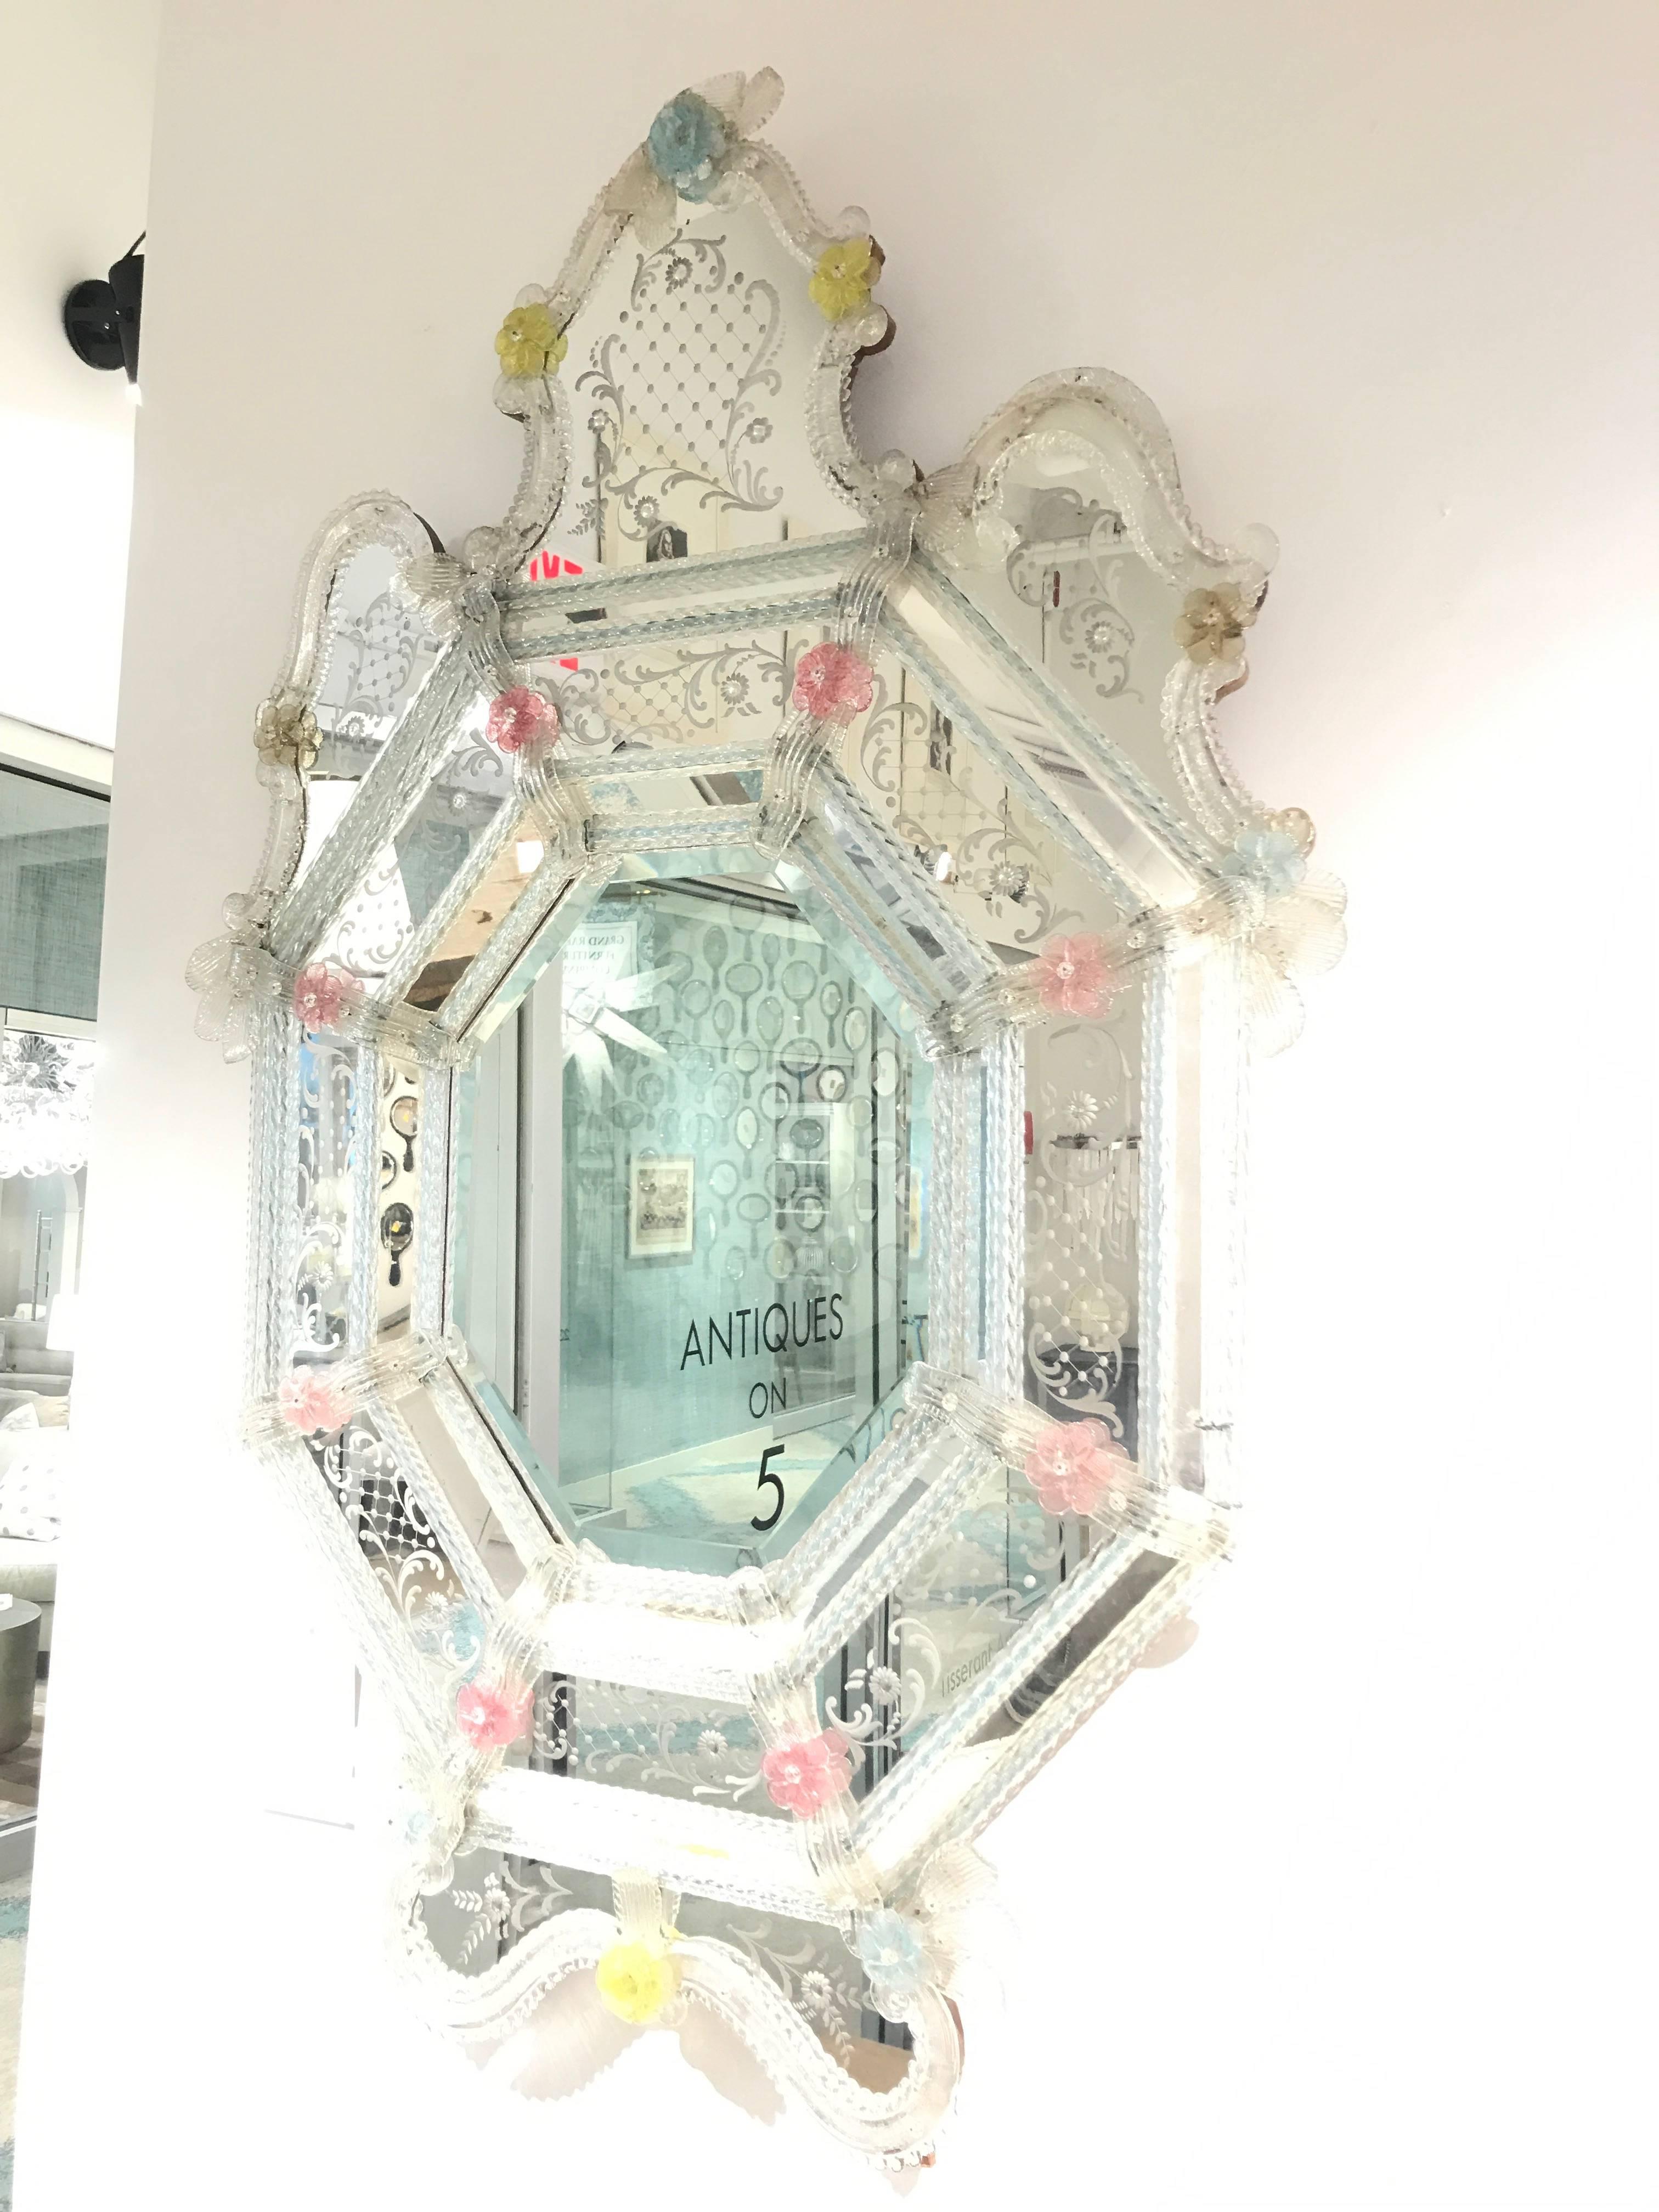 Italian 19th Century Venetian Mirror For Sale